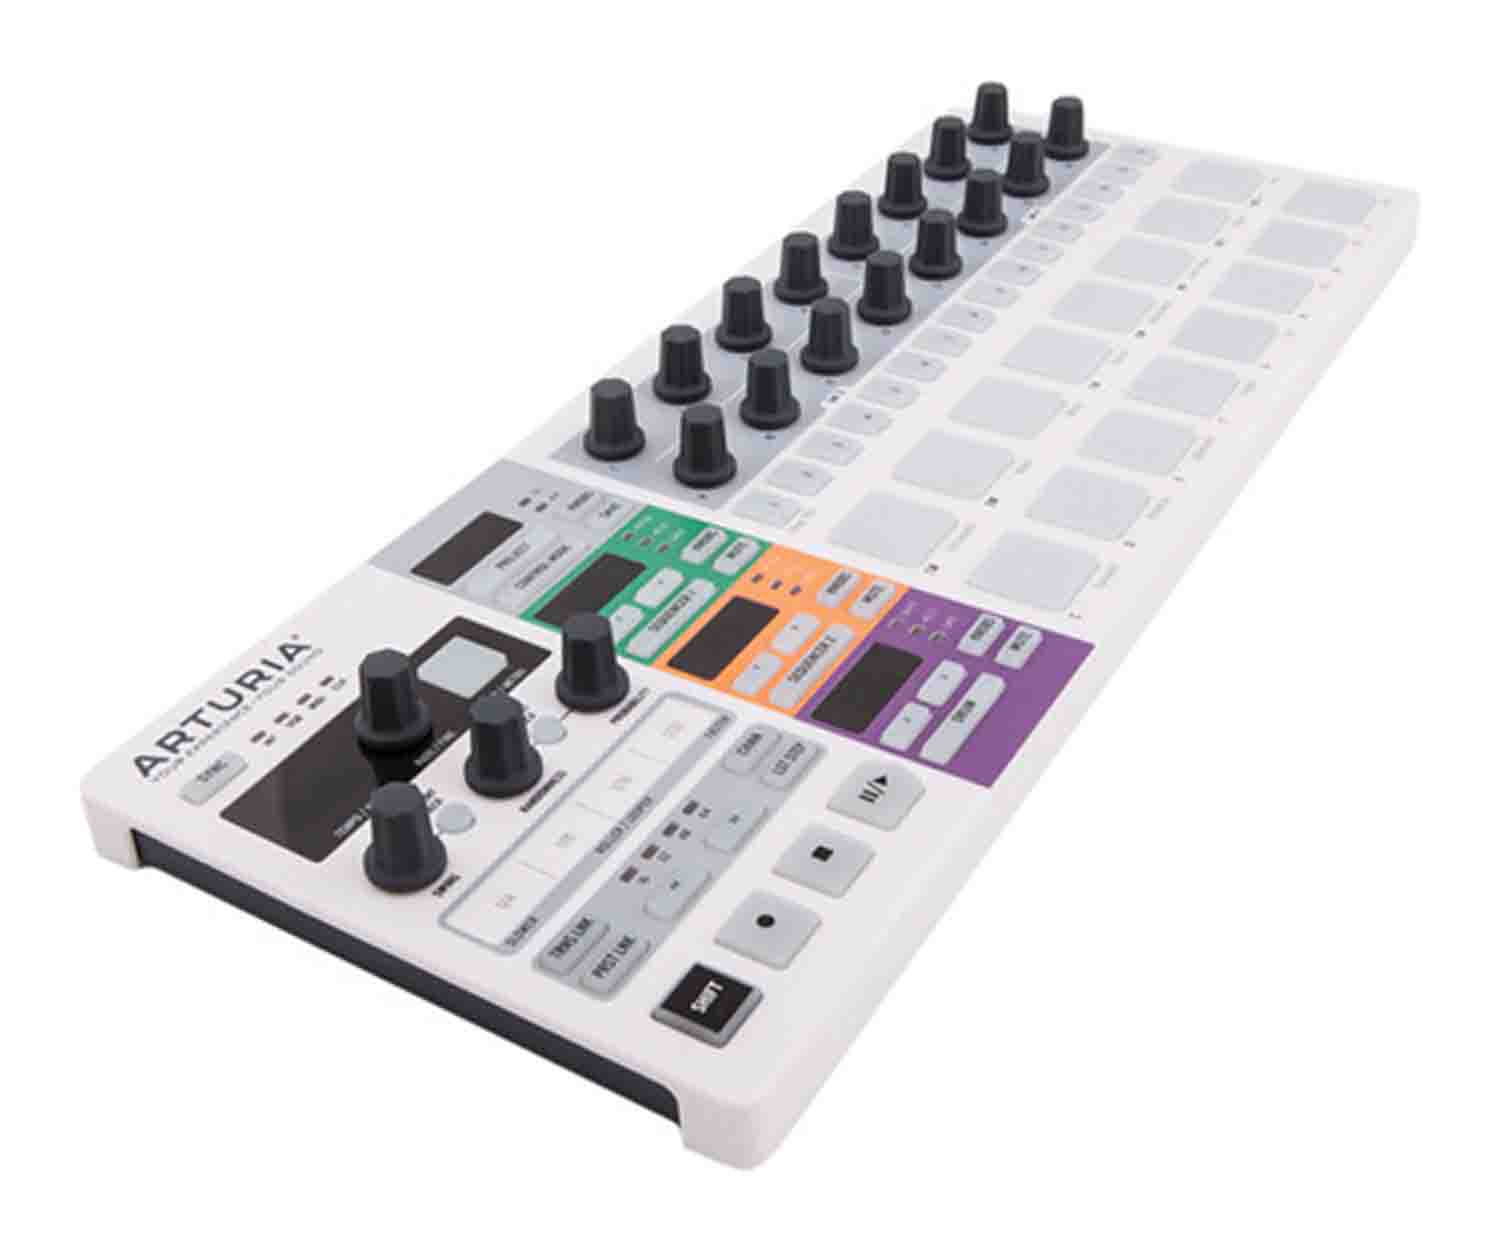 B-Stock: Arturia BeatStep Pro MIDI/Analog Controller and Sequencer - Hollywood DJ